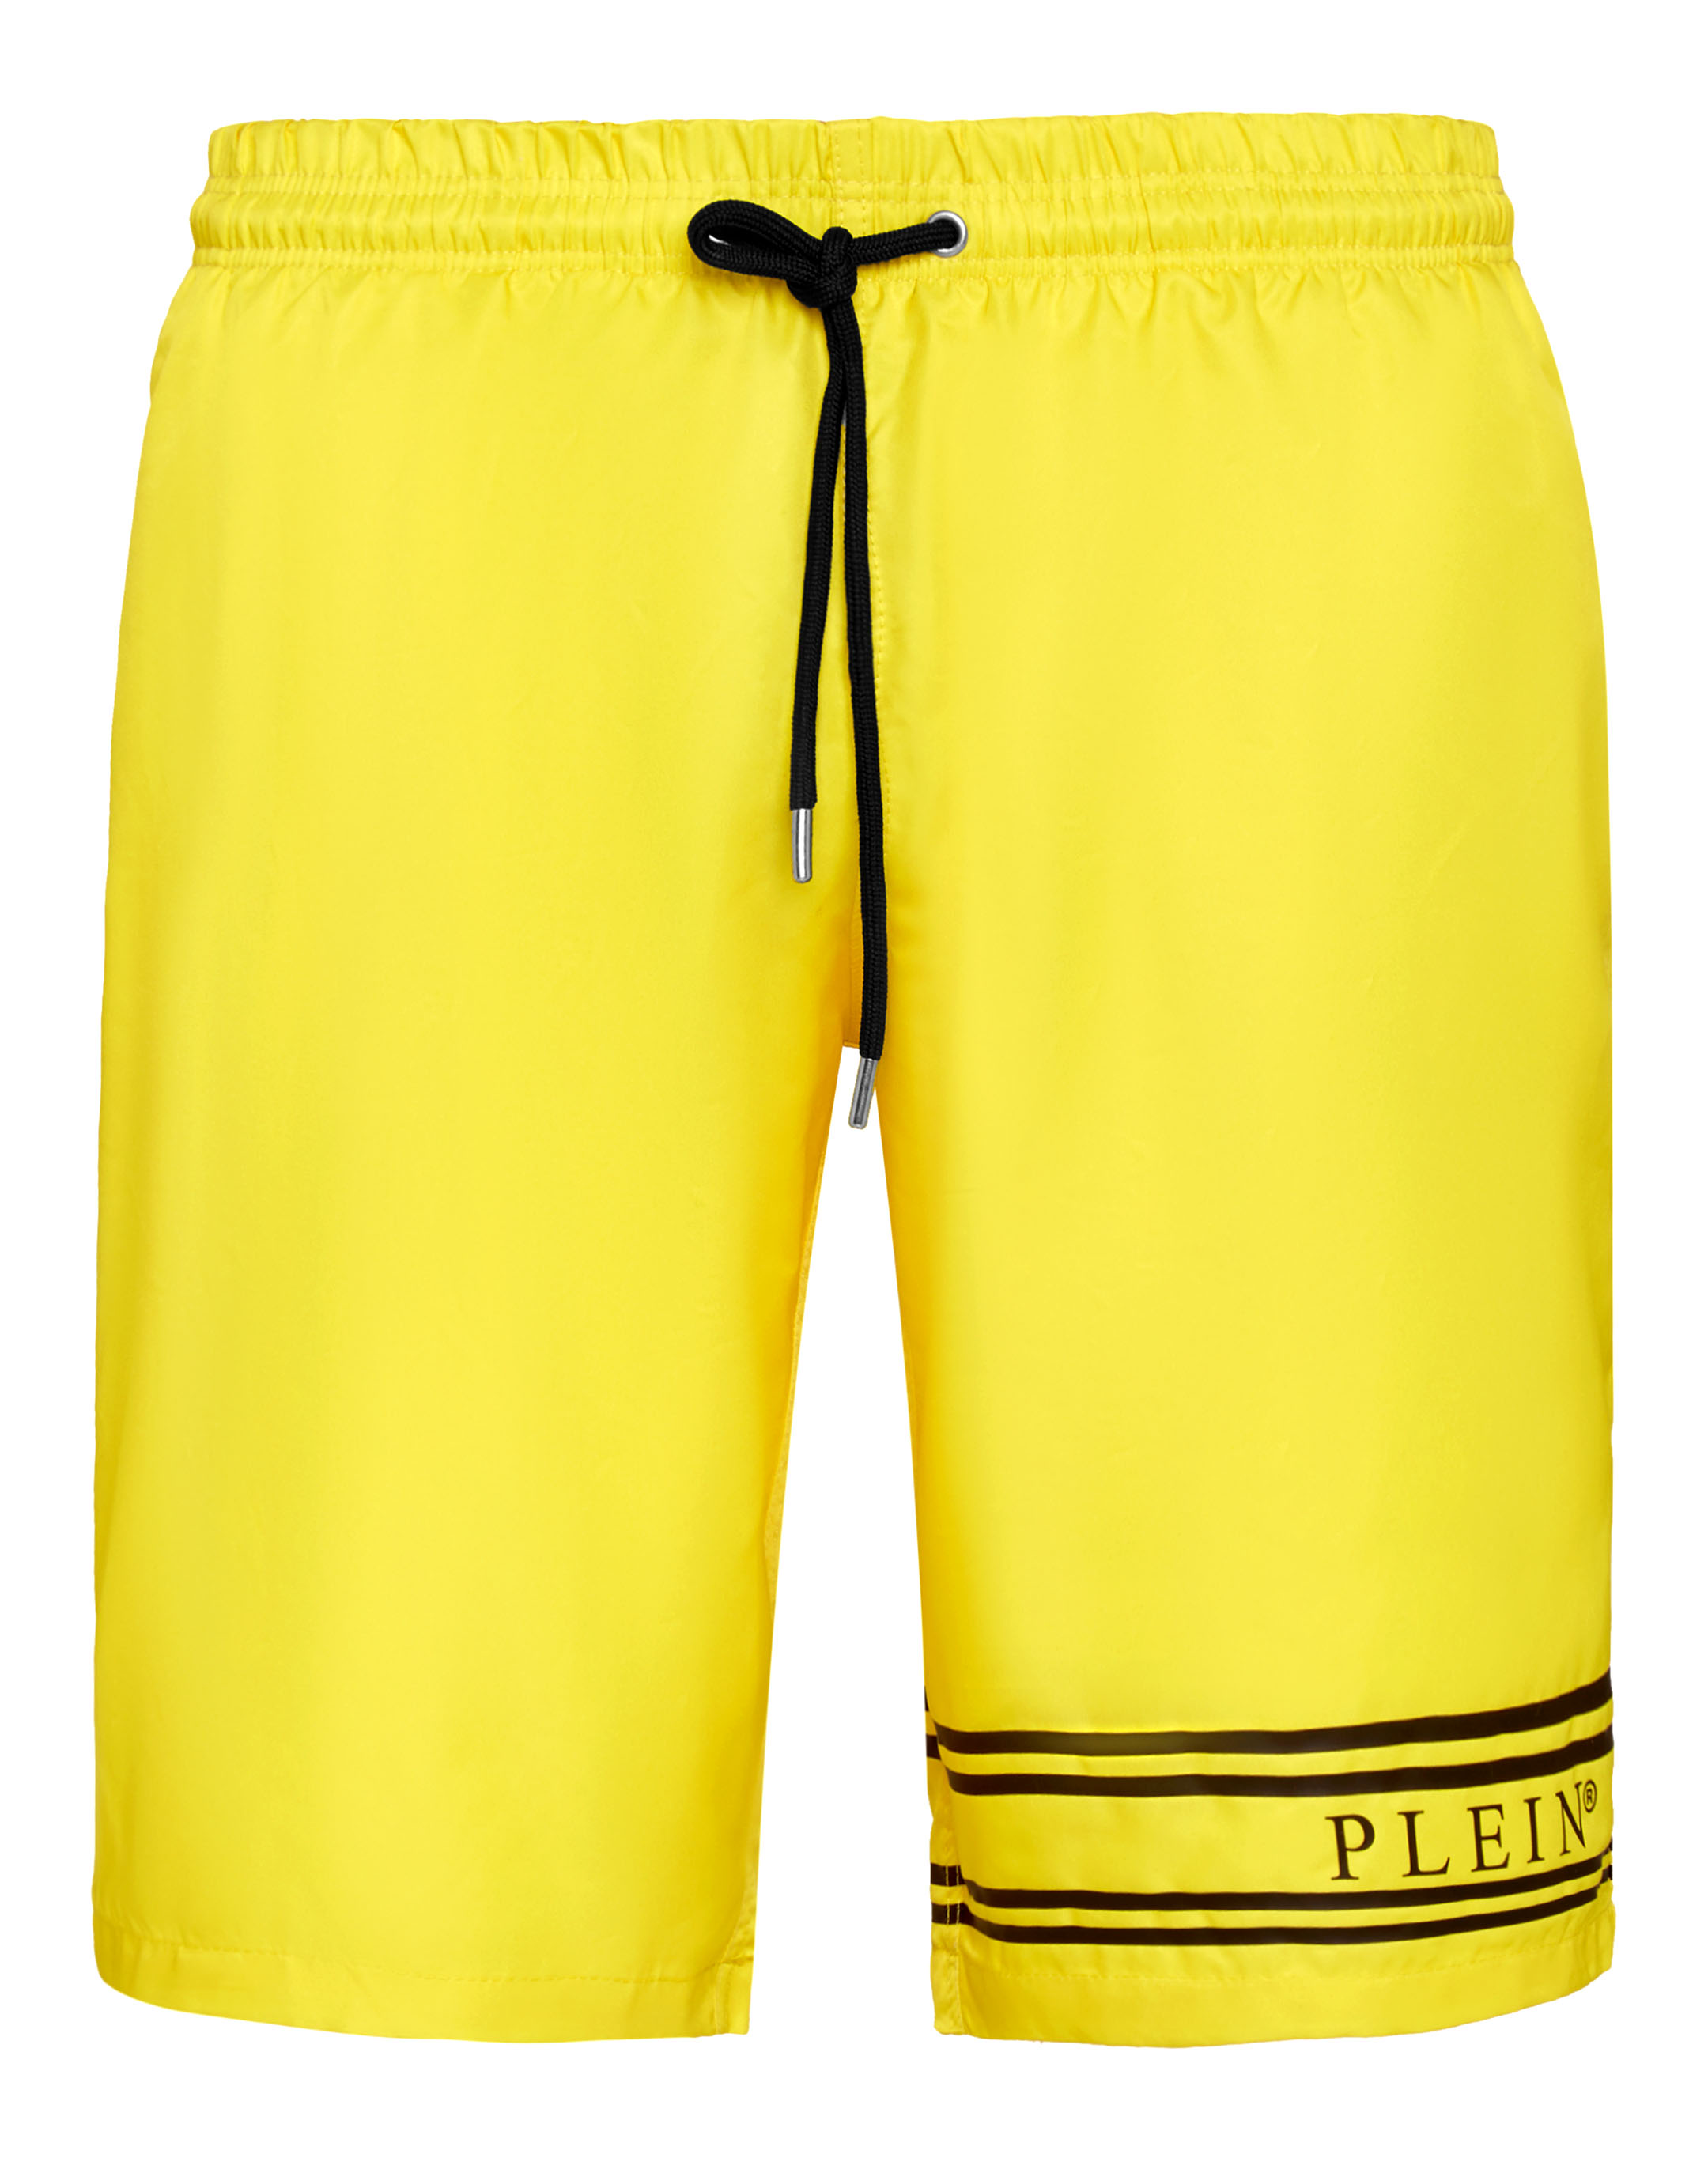 Beachwear Short Trousers | Philipp Plein Outlet